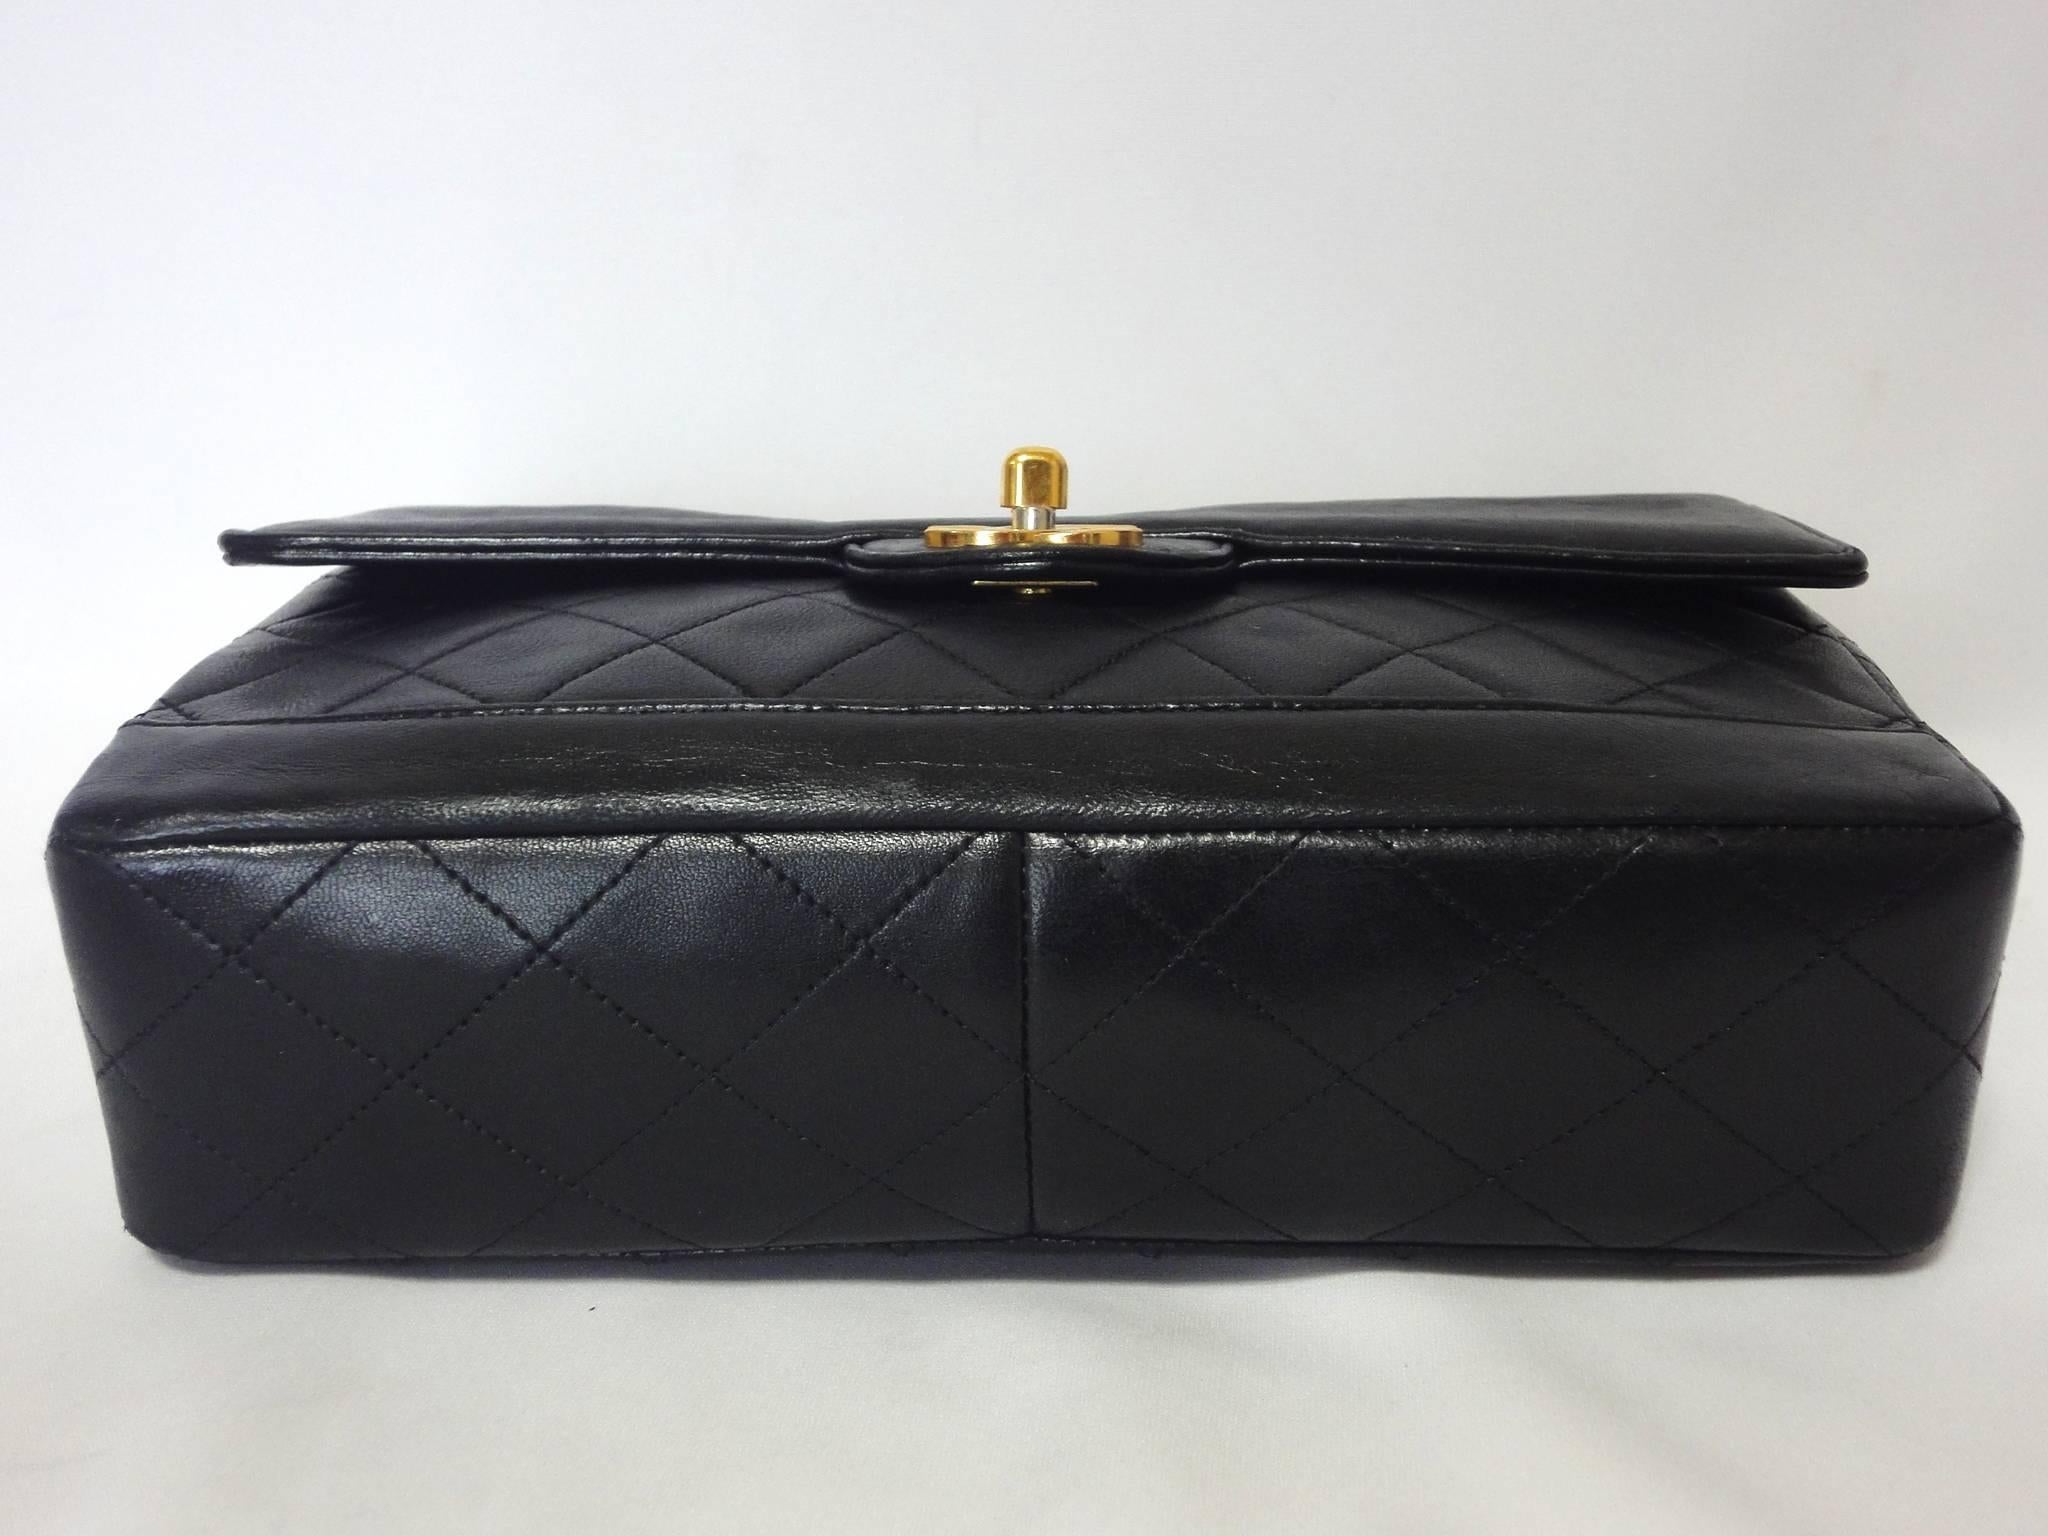 Vintage Chanel classic 2.55 black lambskin shoulder bag with golden chain straps 2